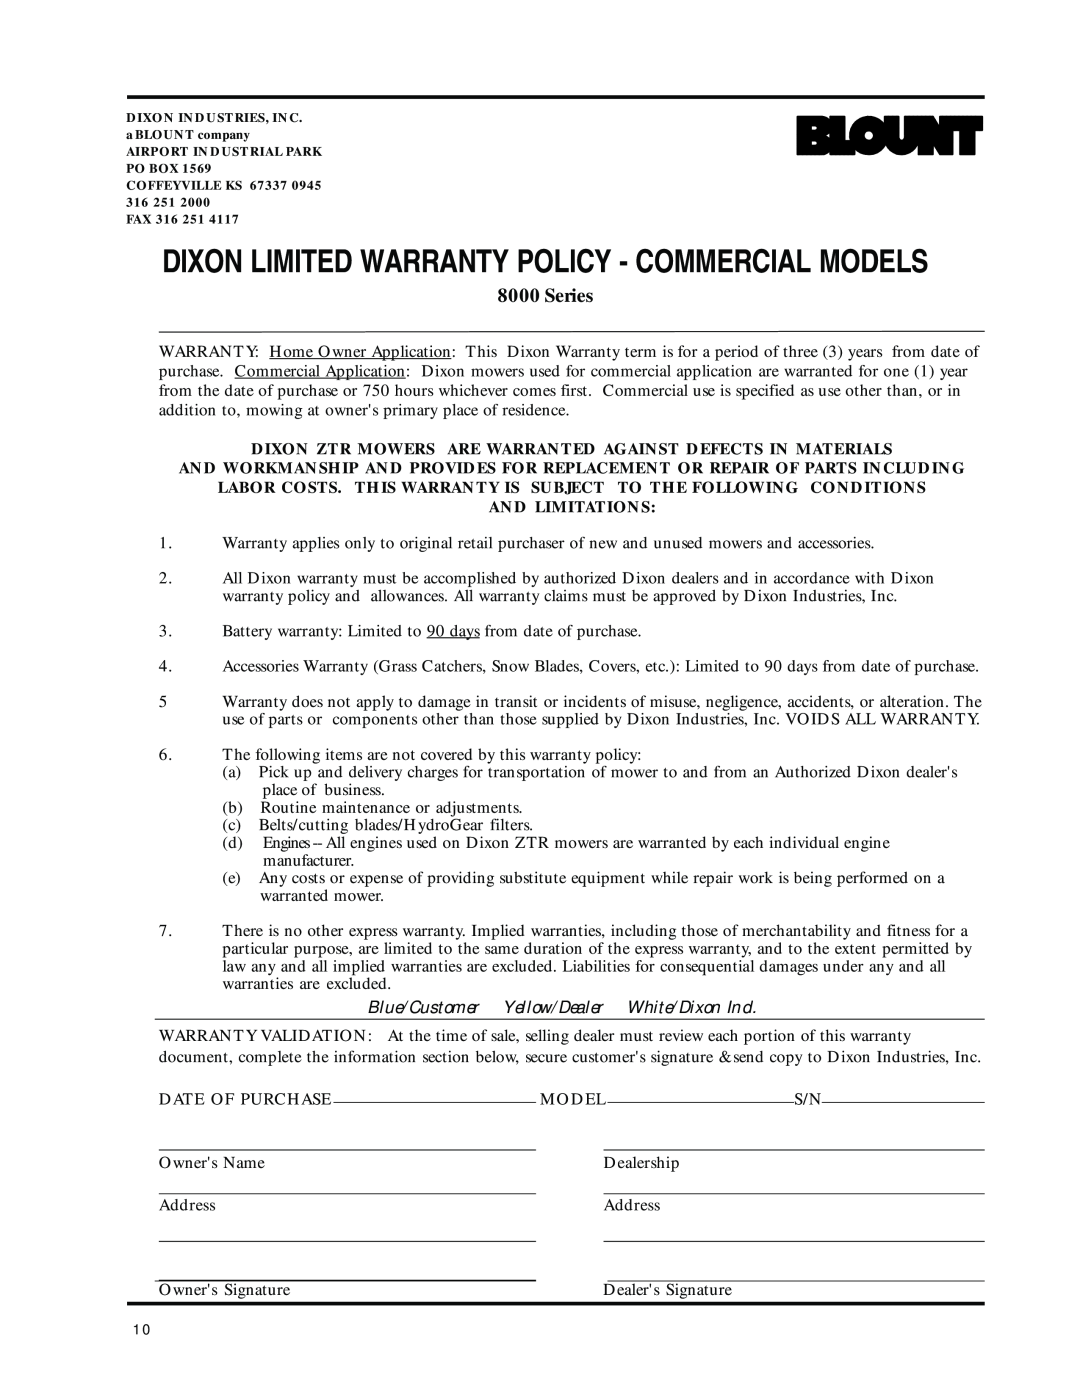 Dixon 8000 Series manual Dixon Limited Warranty Policy - Commercial Models, And Limitations 